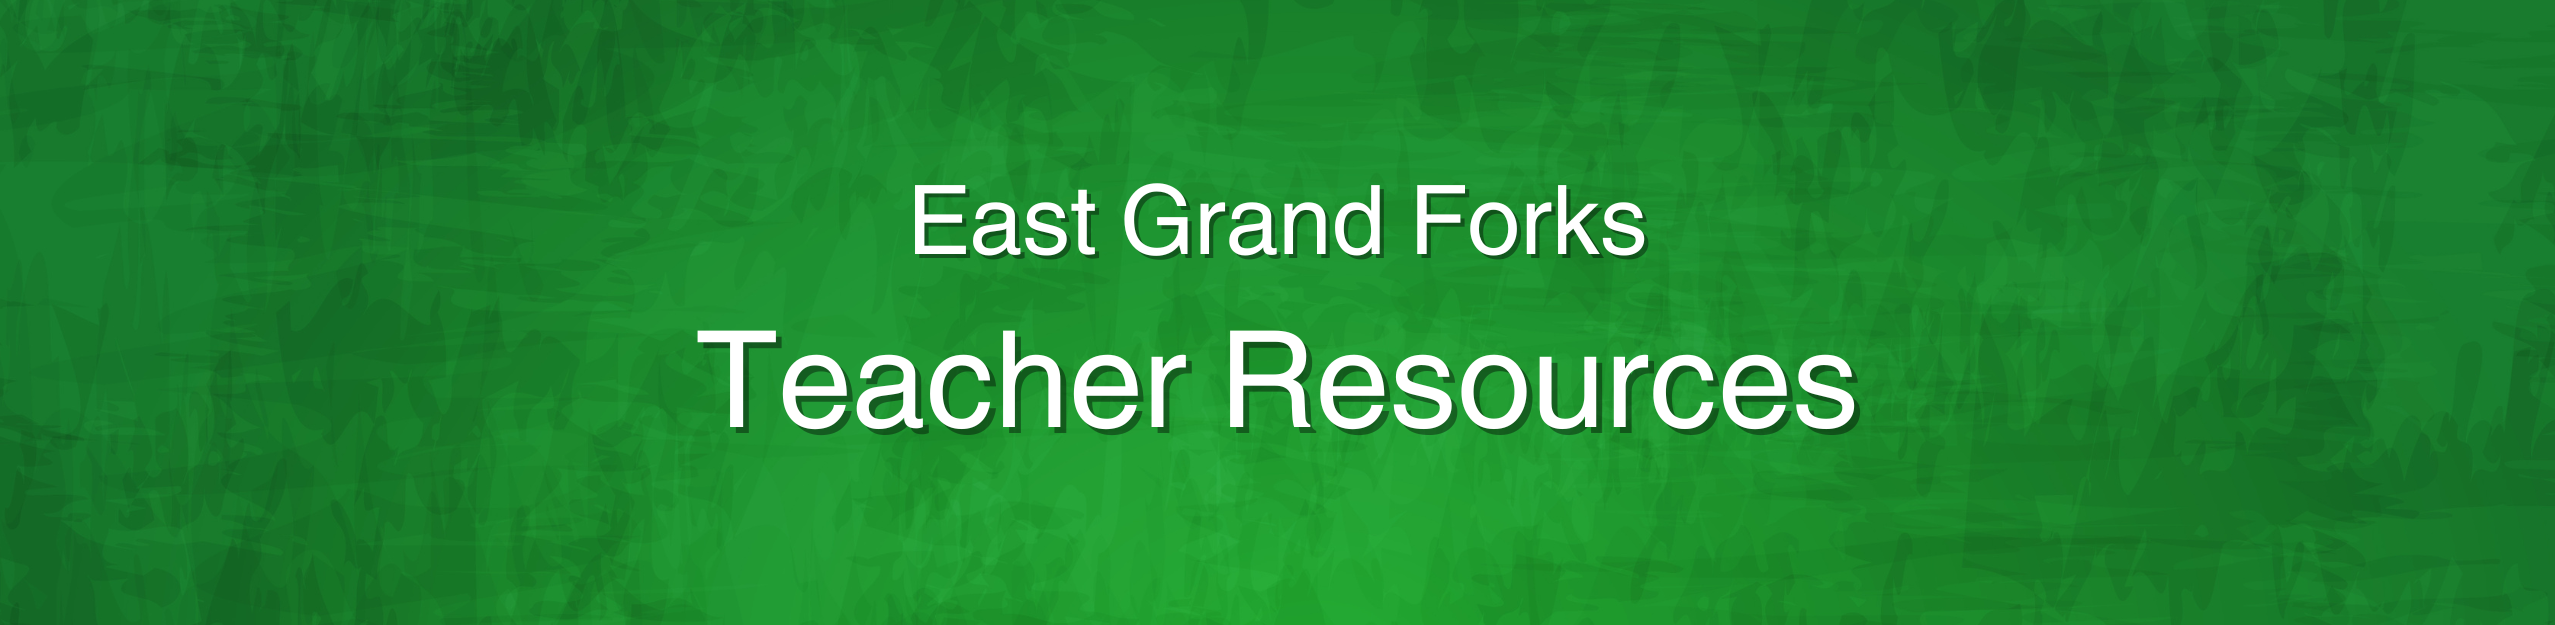 East Grand Forks Teacher Resources